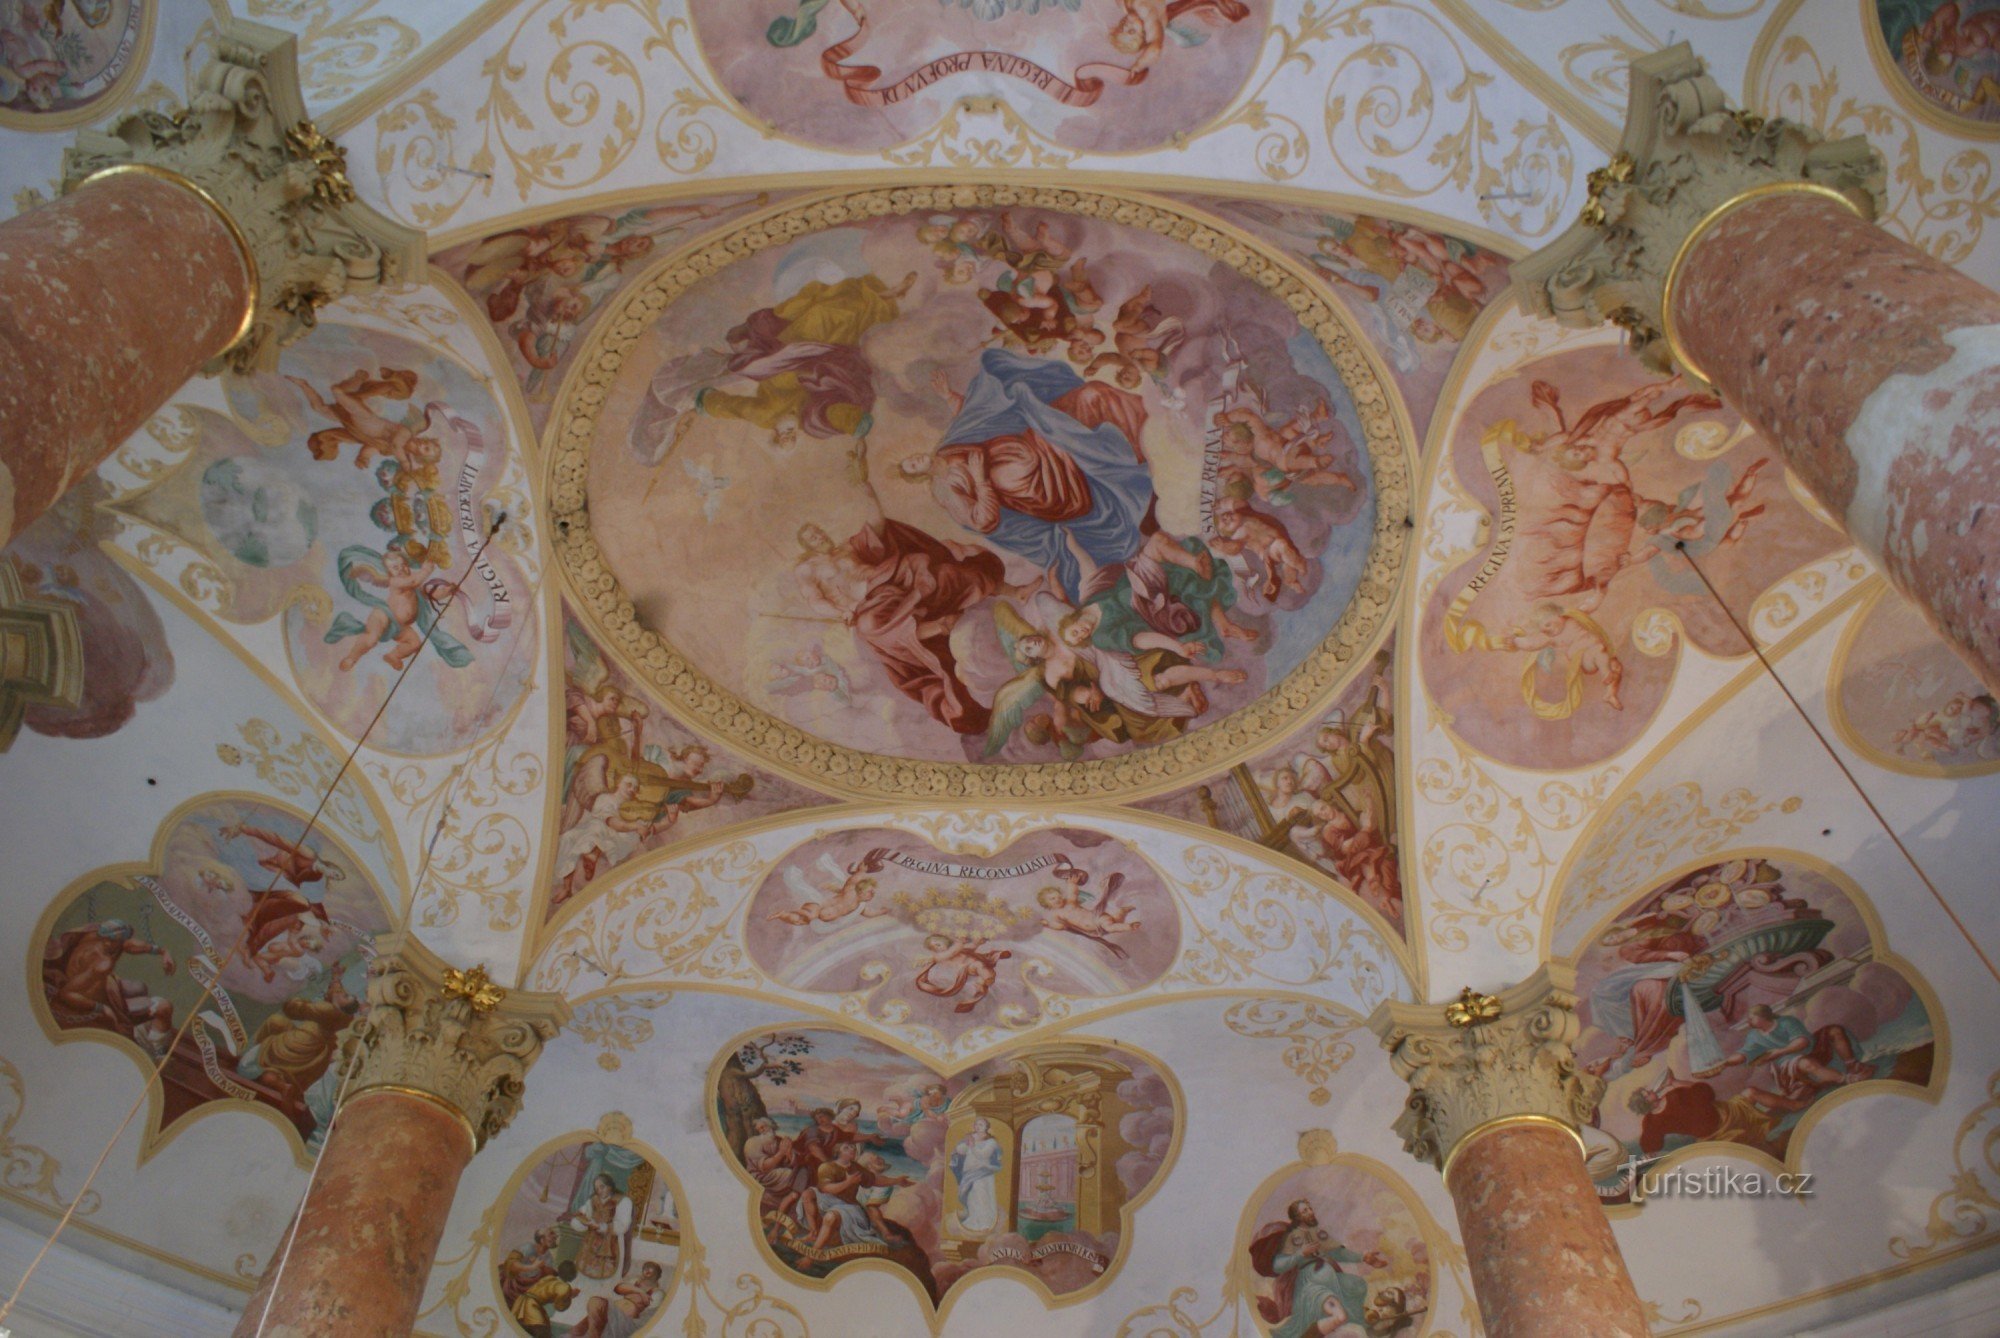 central fresco